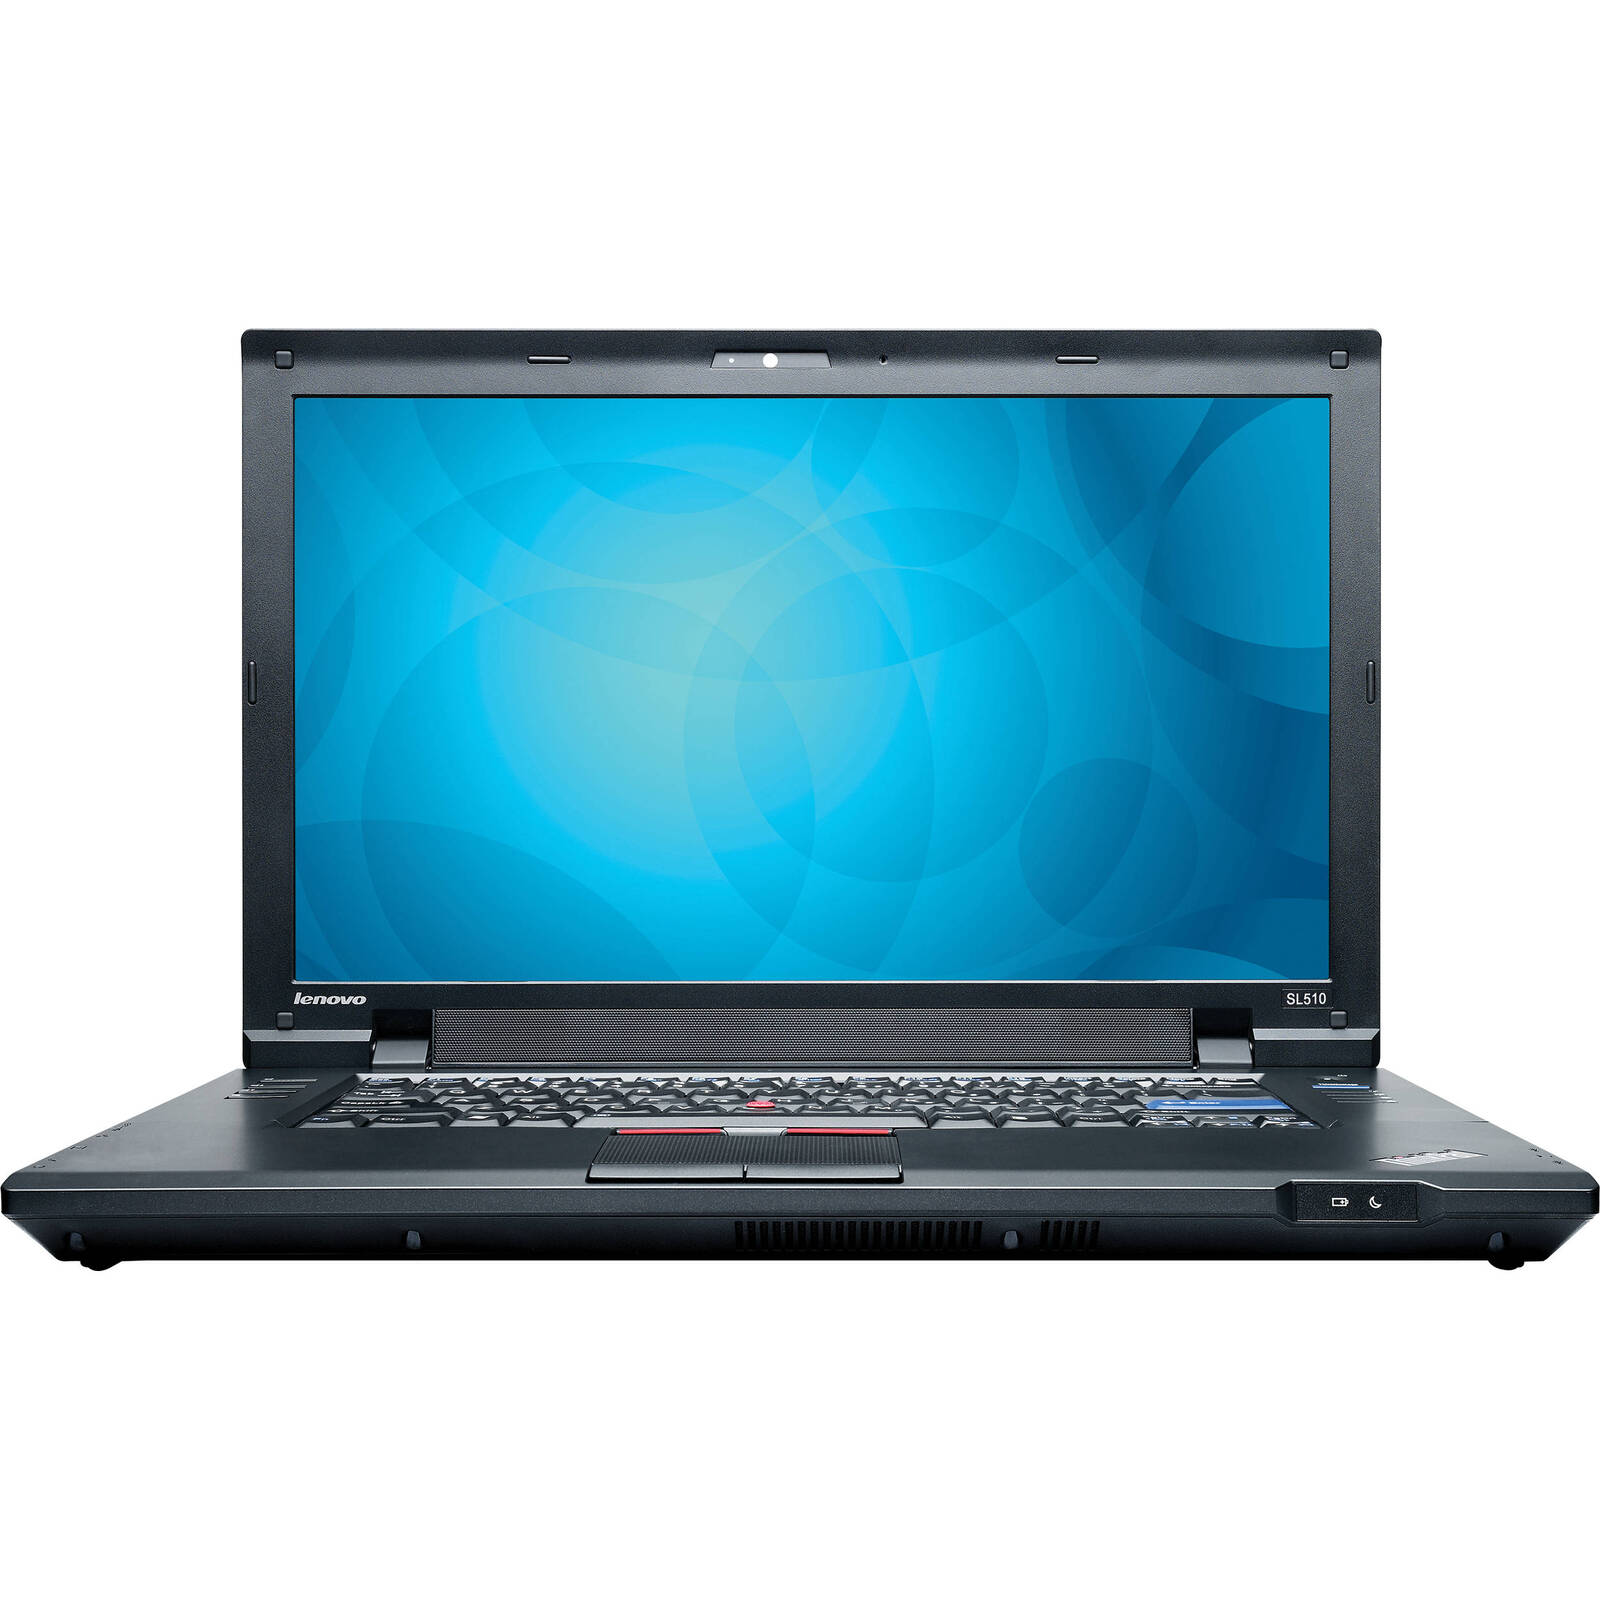 Lenovo ThinkPad SL510 15.6" Laptop Intel Core Duo CPU T6670 320GB 4GB RAM - Very Good Condition